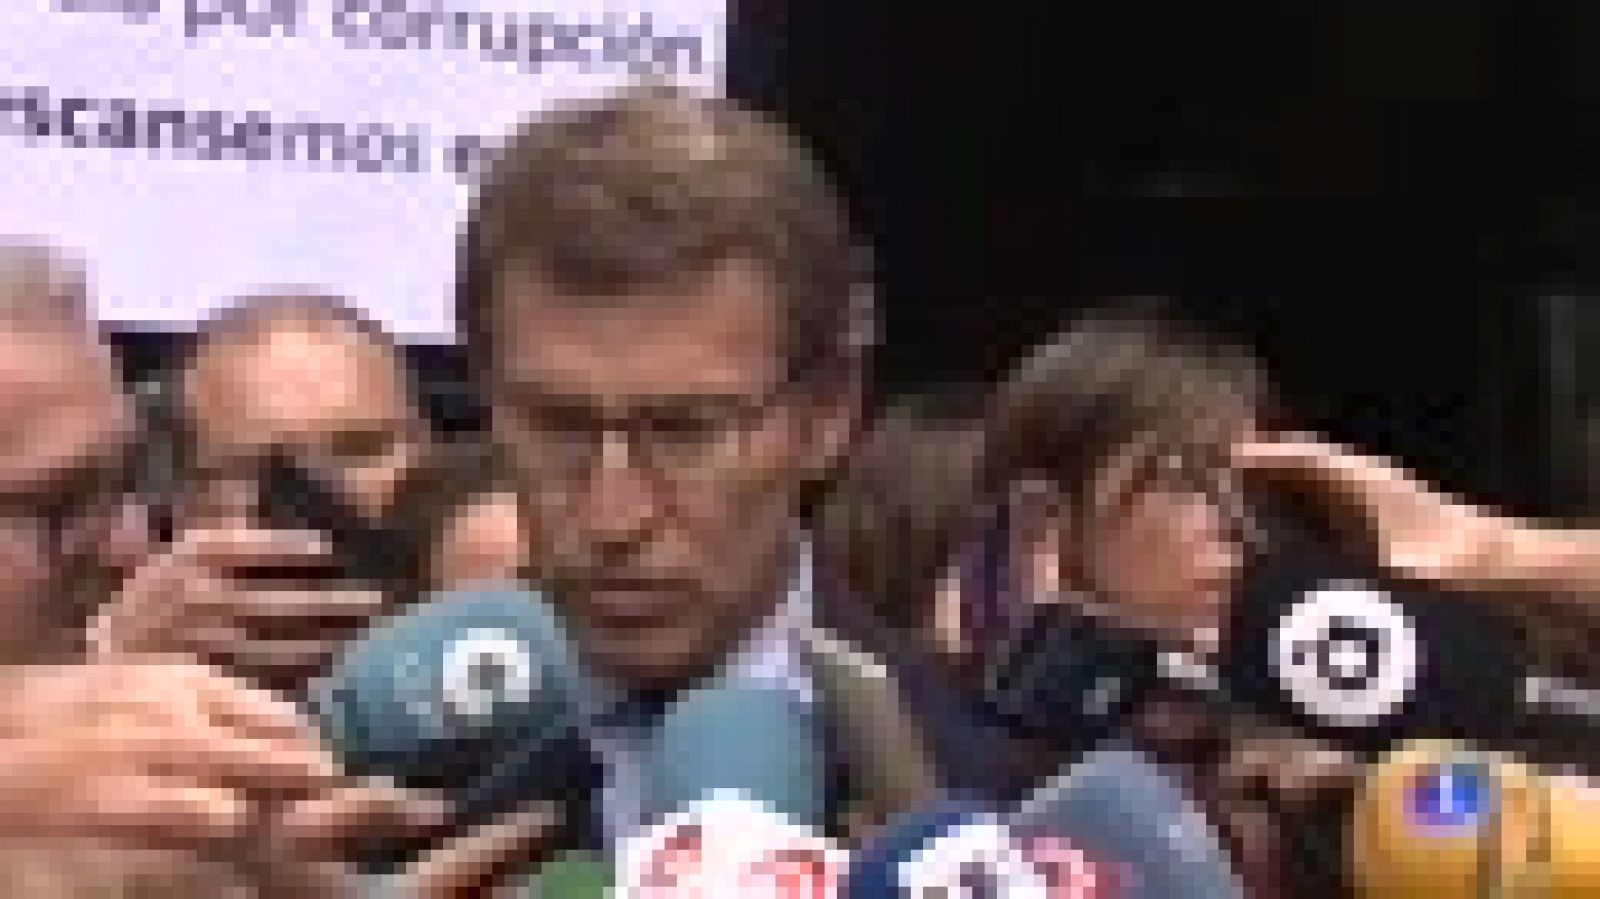 Feijóo, sobre la marcha de Rajoy: "Se va invicto" 